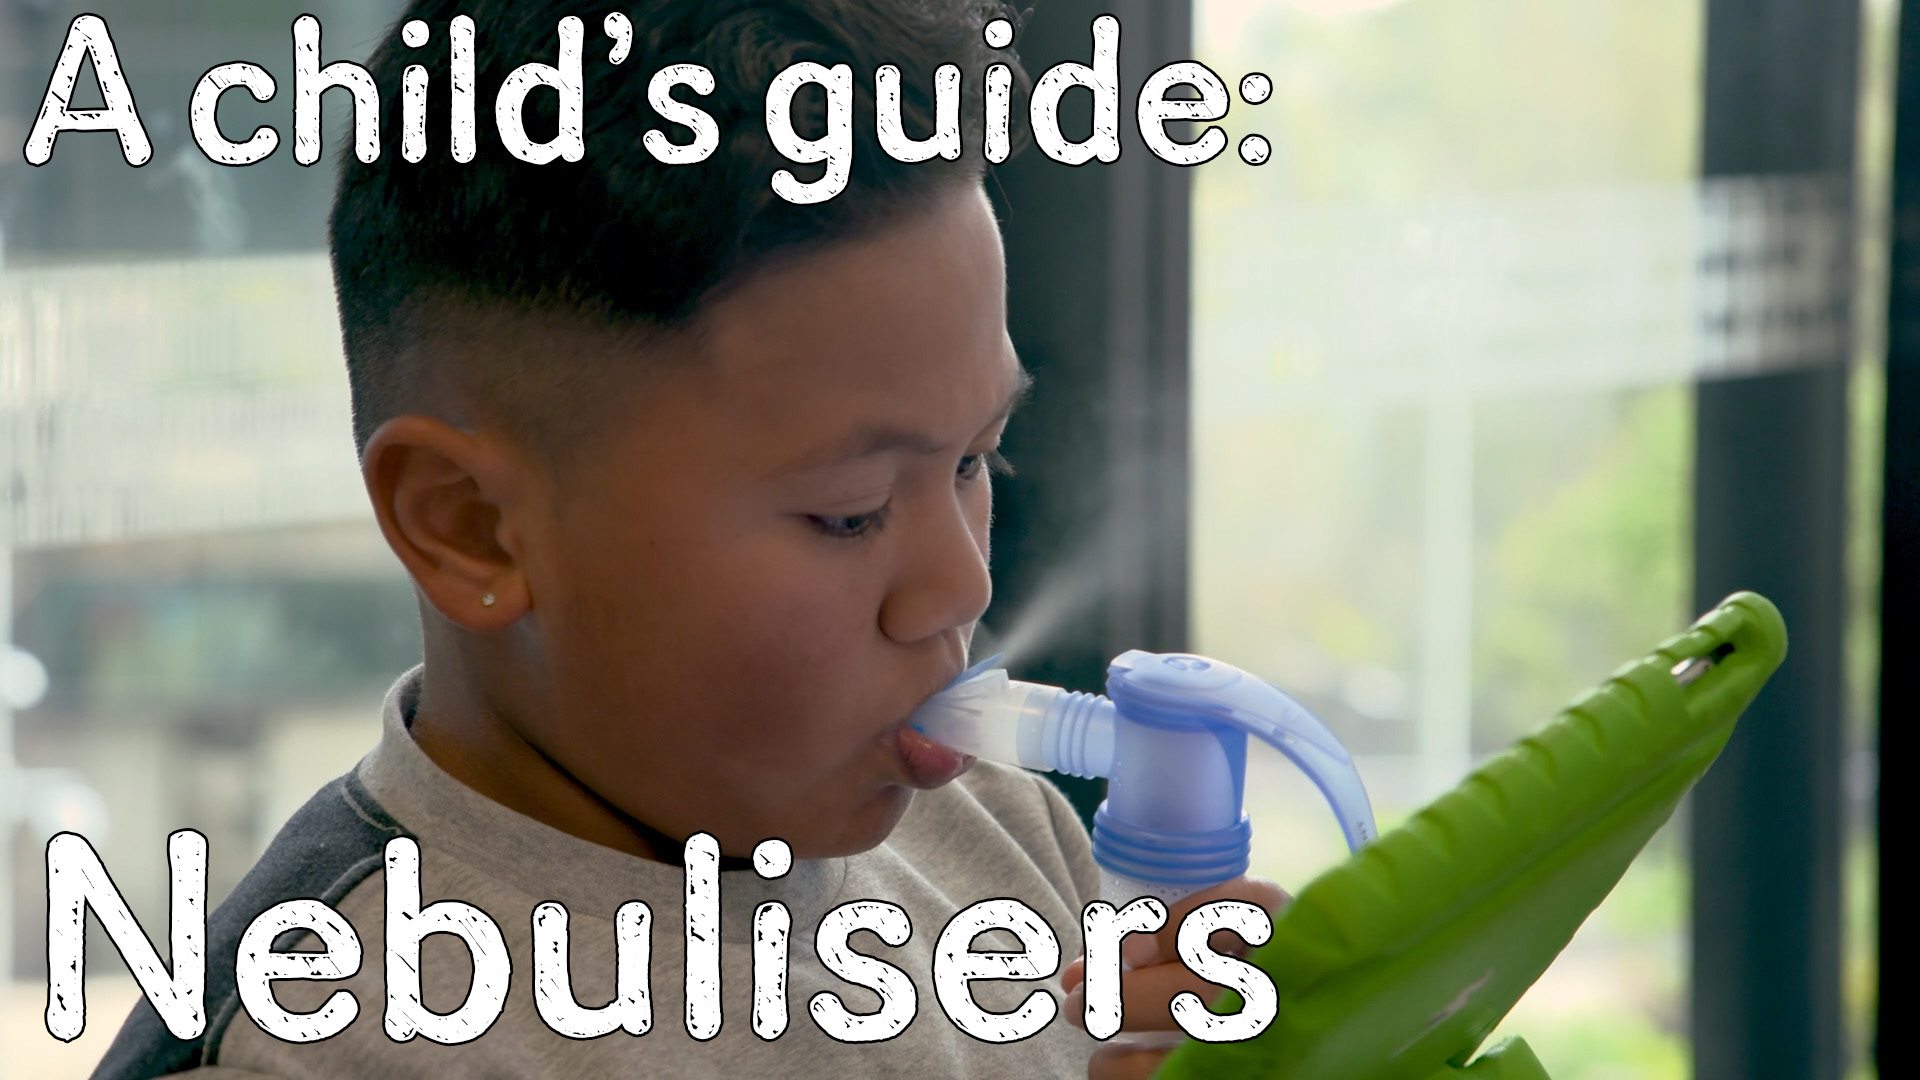 Maddox tells us all about nebulisers